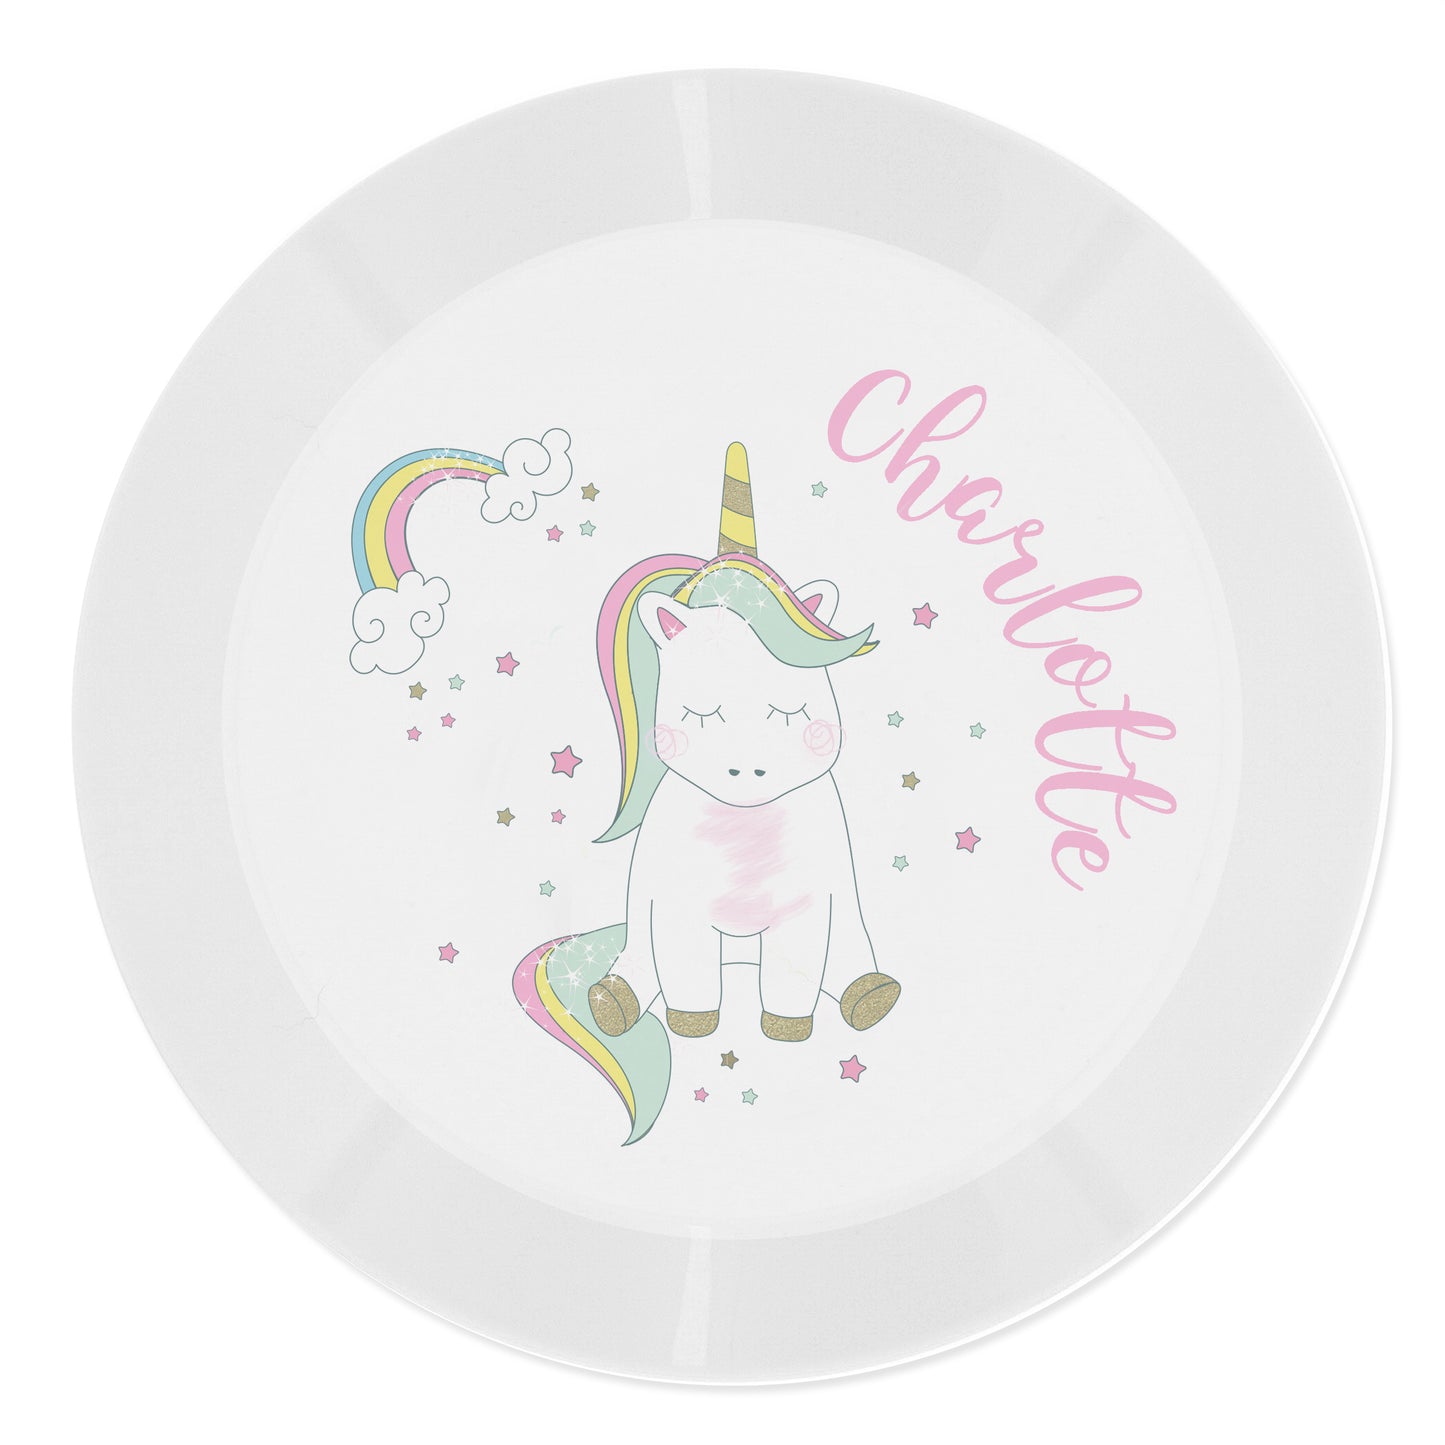 Personalised Baby Unicorn Plastic Plate - Personalise It!